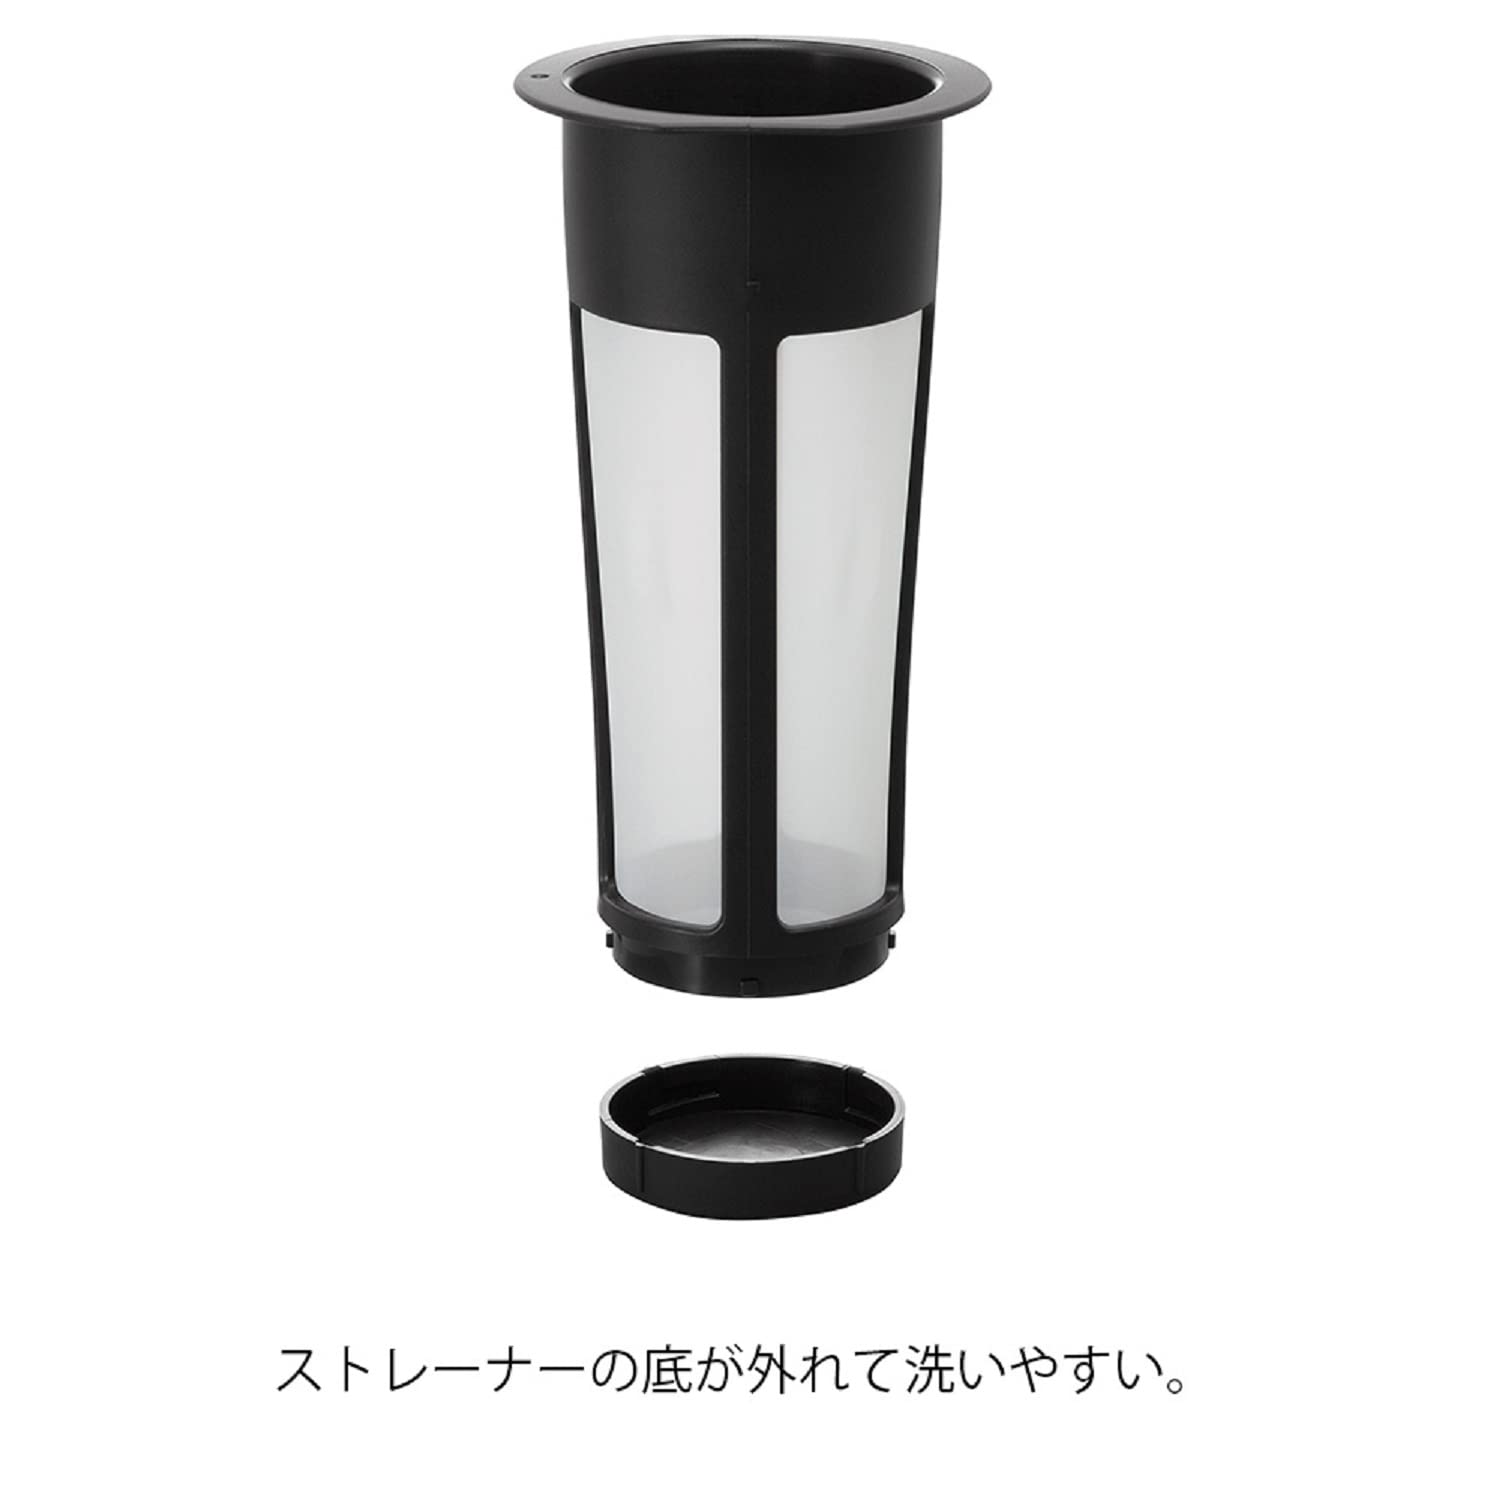 HARIO( HARIO ) water .... pot black 1000ml coffee pitcher made in Japan MCPN-14-B